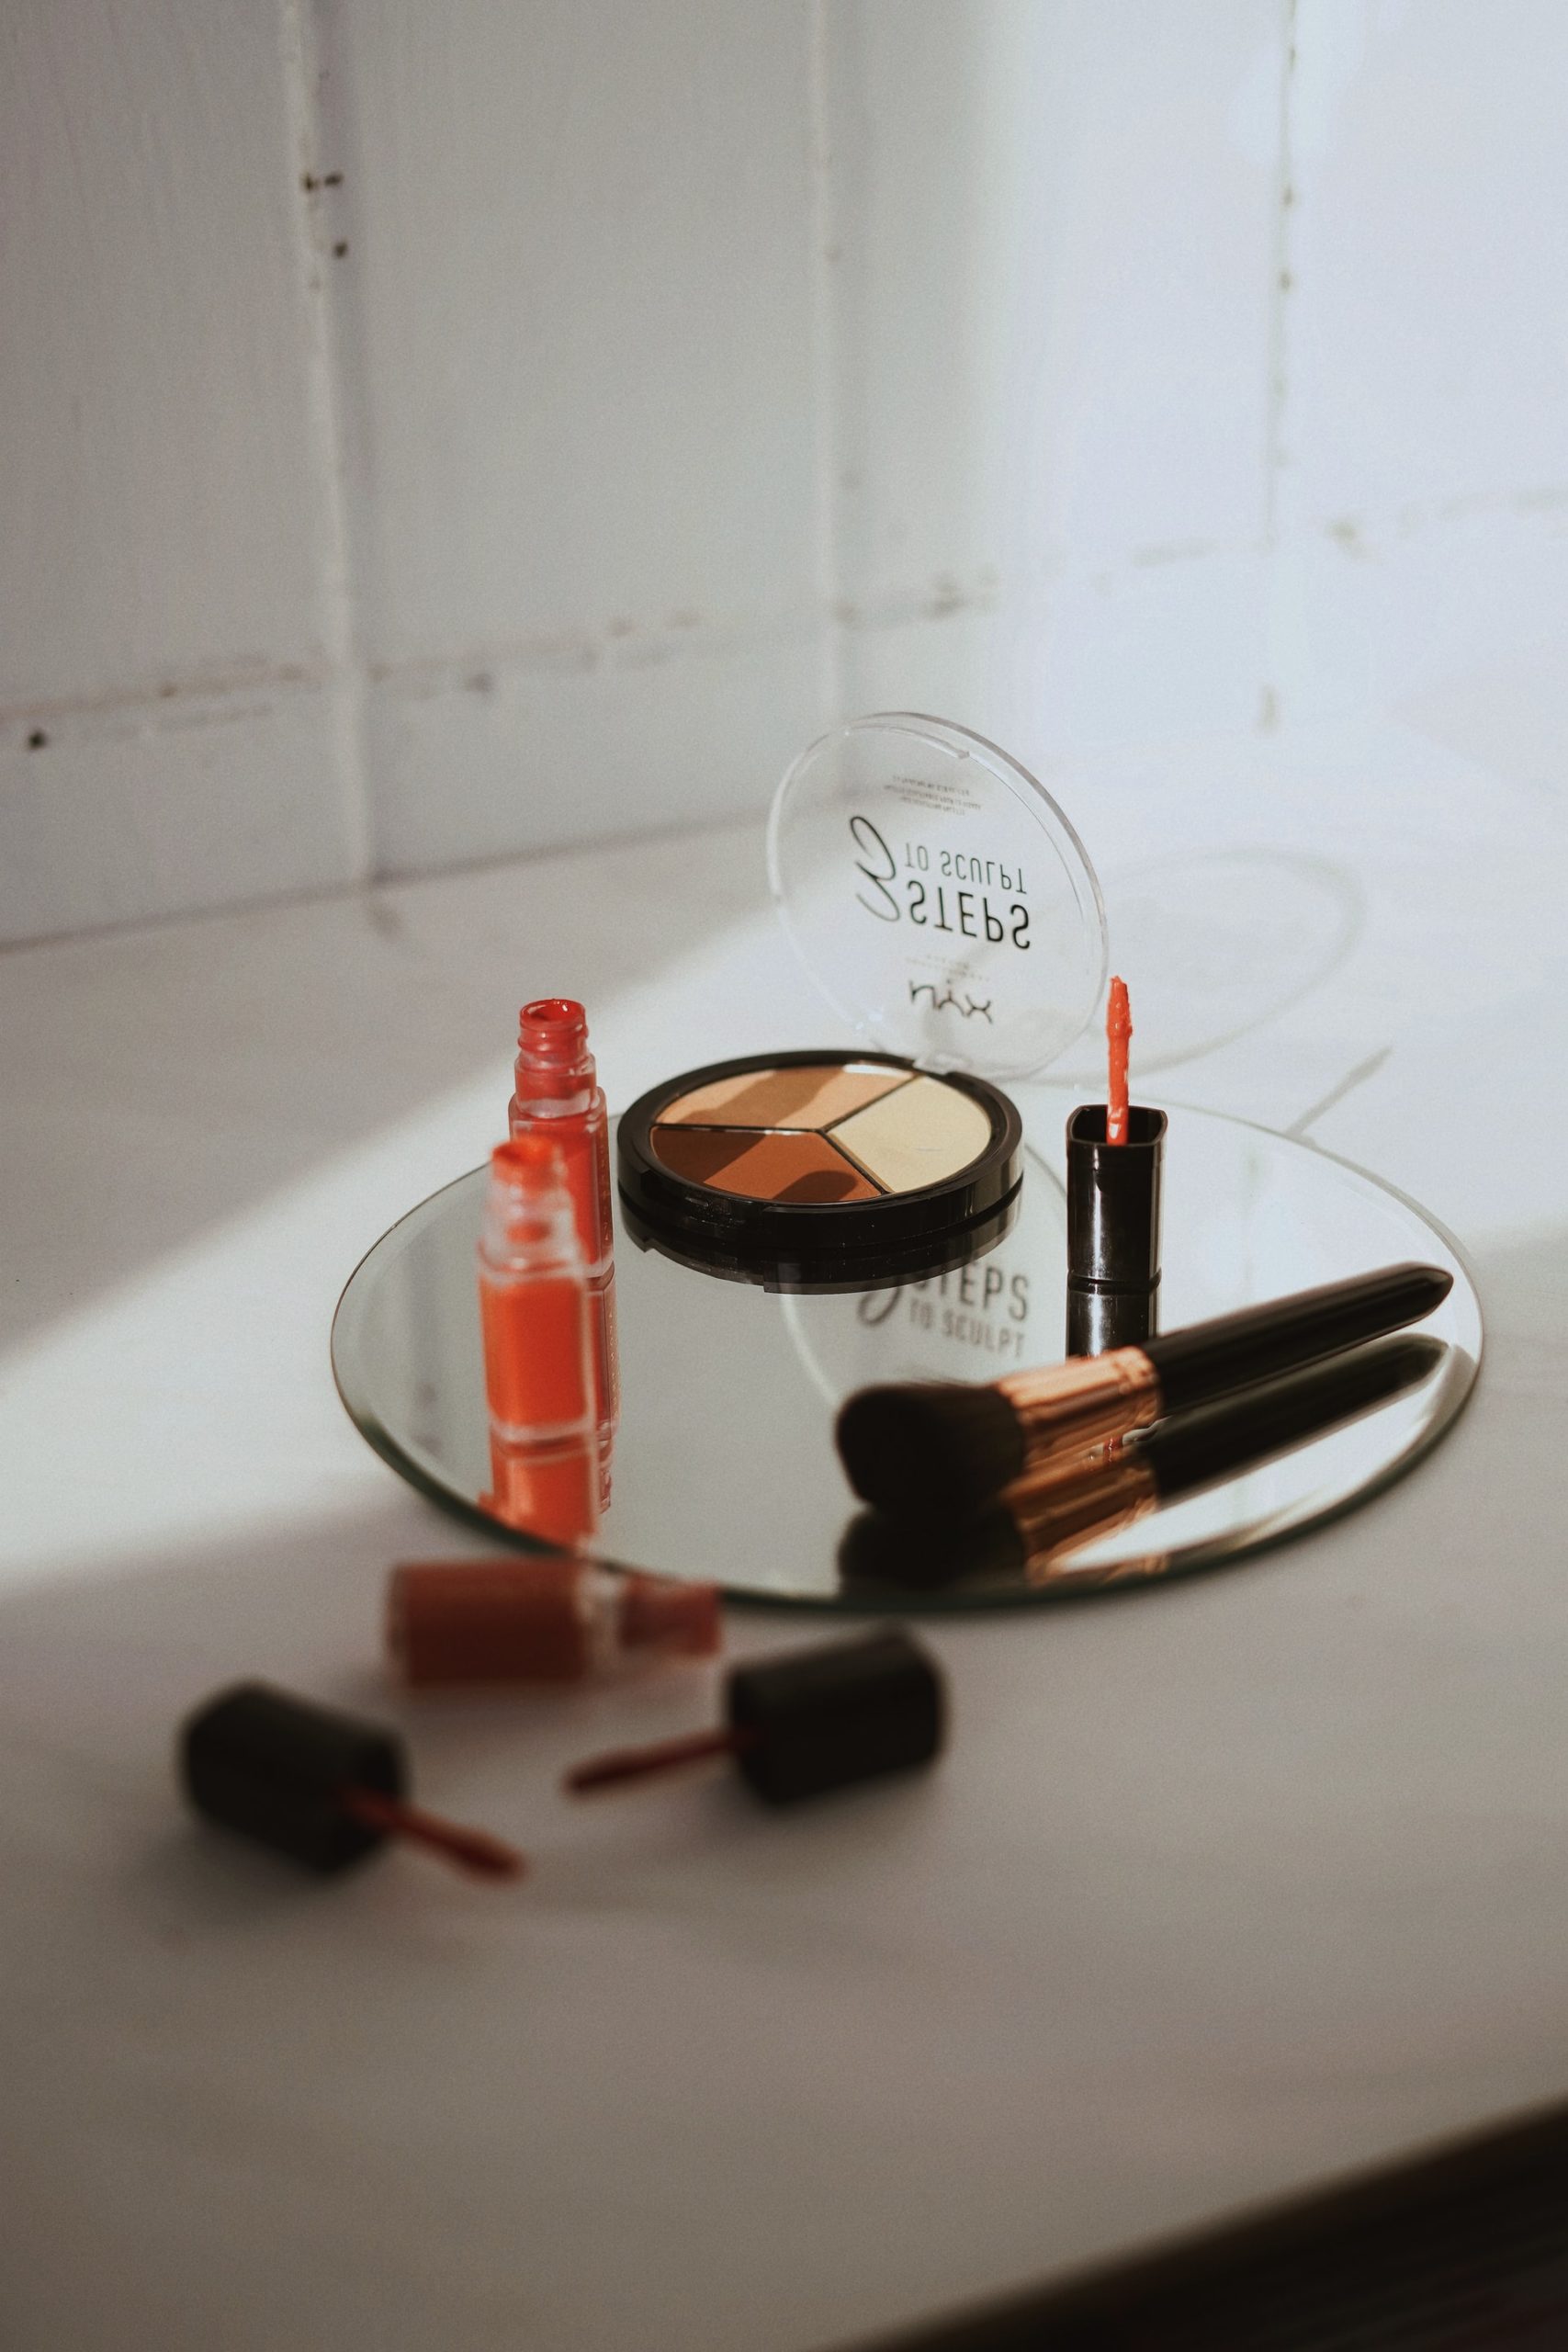 Products for Makeup Artists 2021 - Natalie Setareh